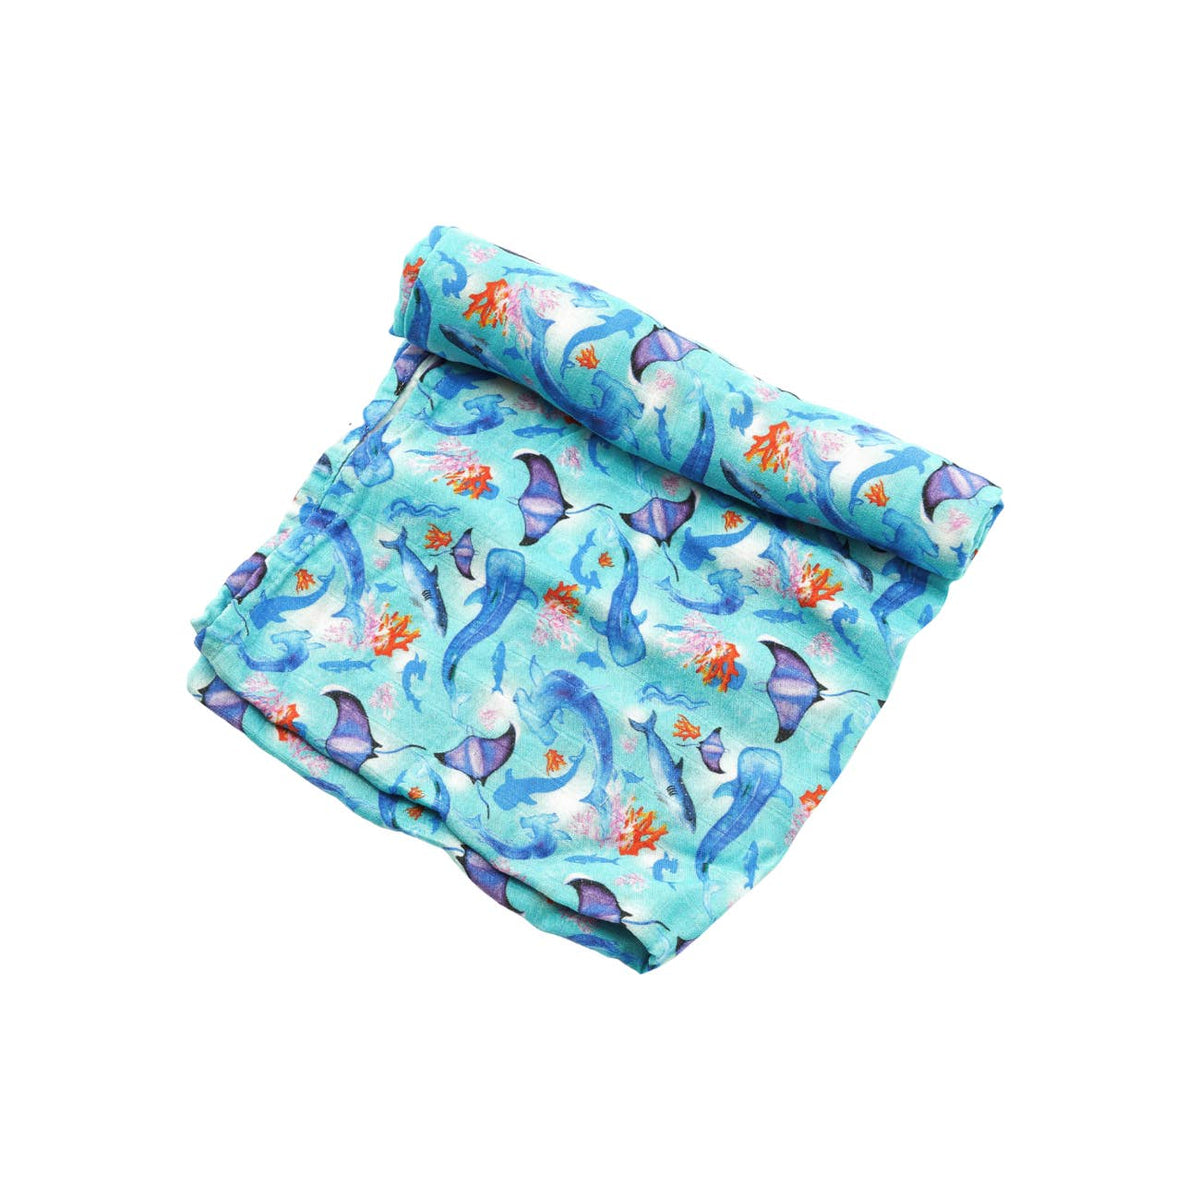 Snuggle Swaddle Blanket - FINAL SALE